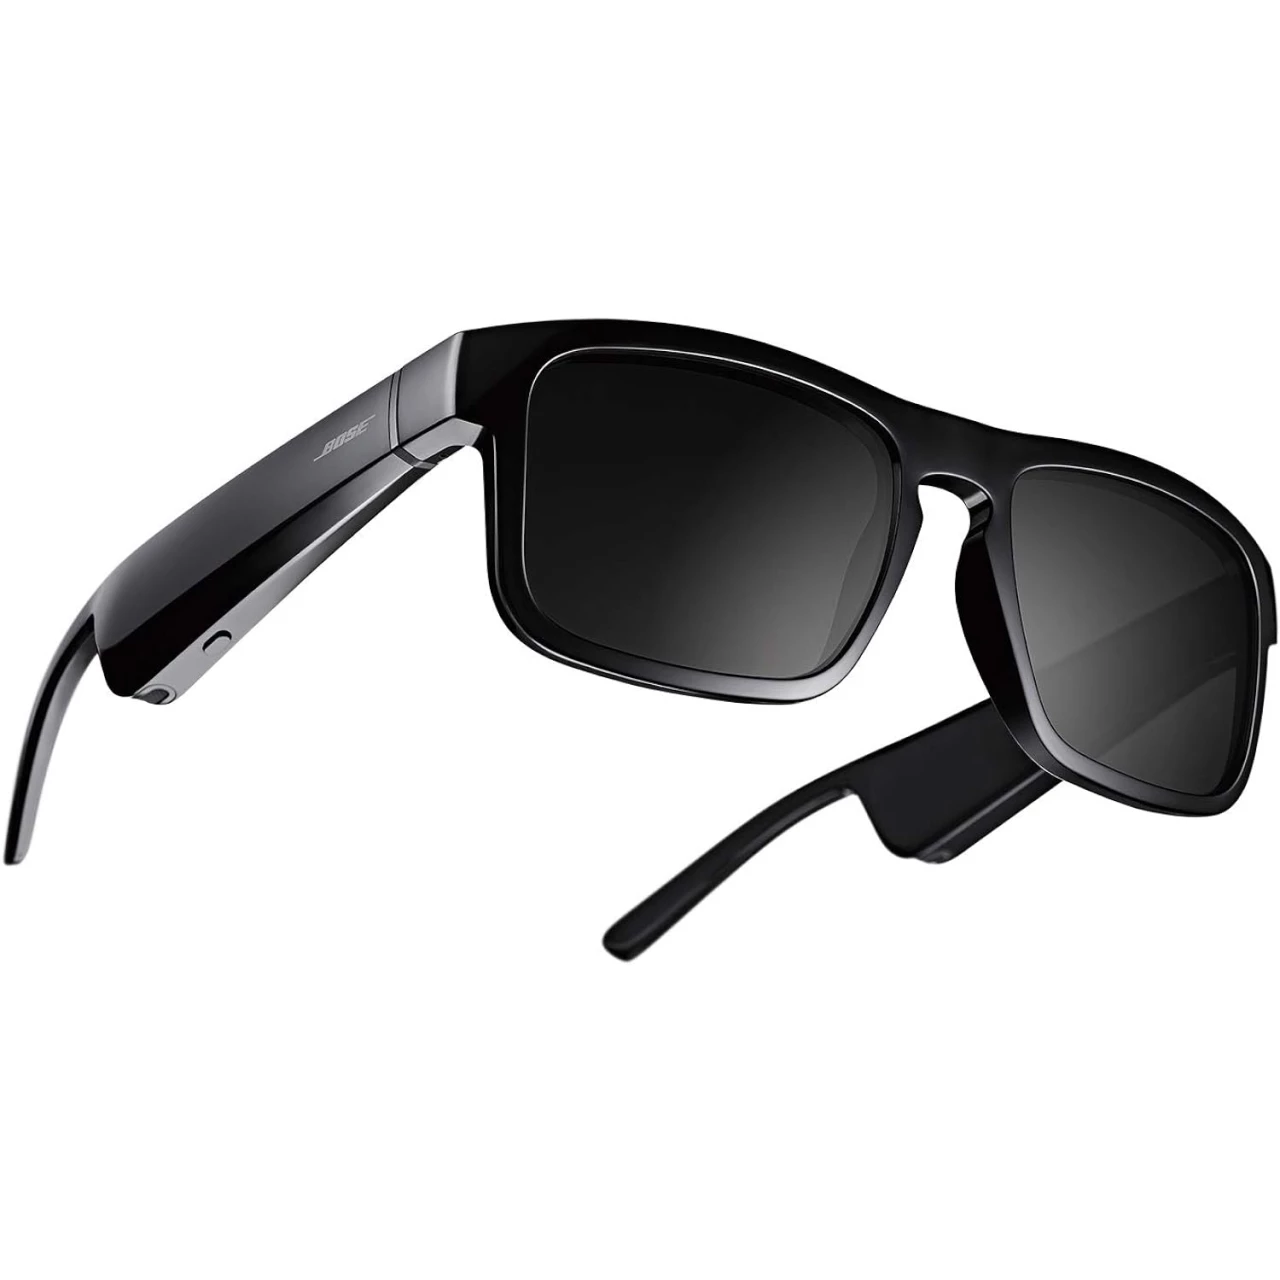 Bose Frames Tenor, Smart Glasses, Bluetooth Audio Sunglasses, Black, 55 mm